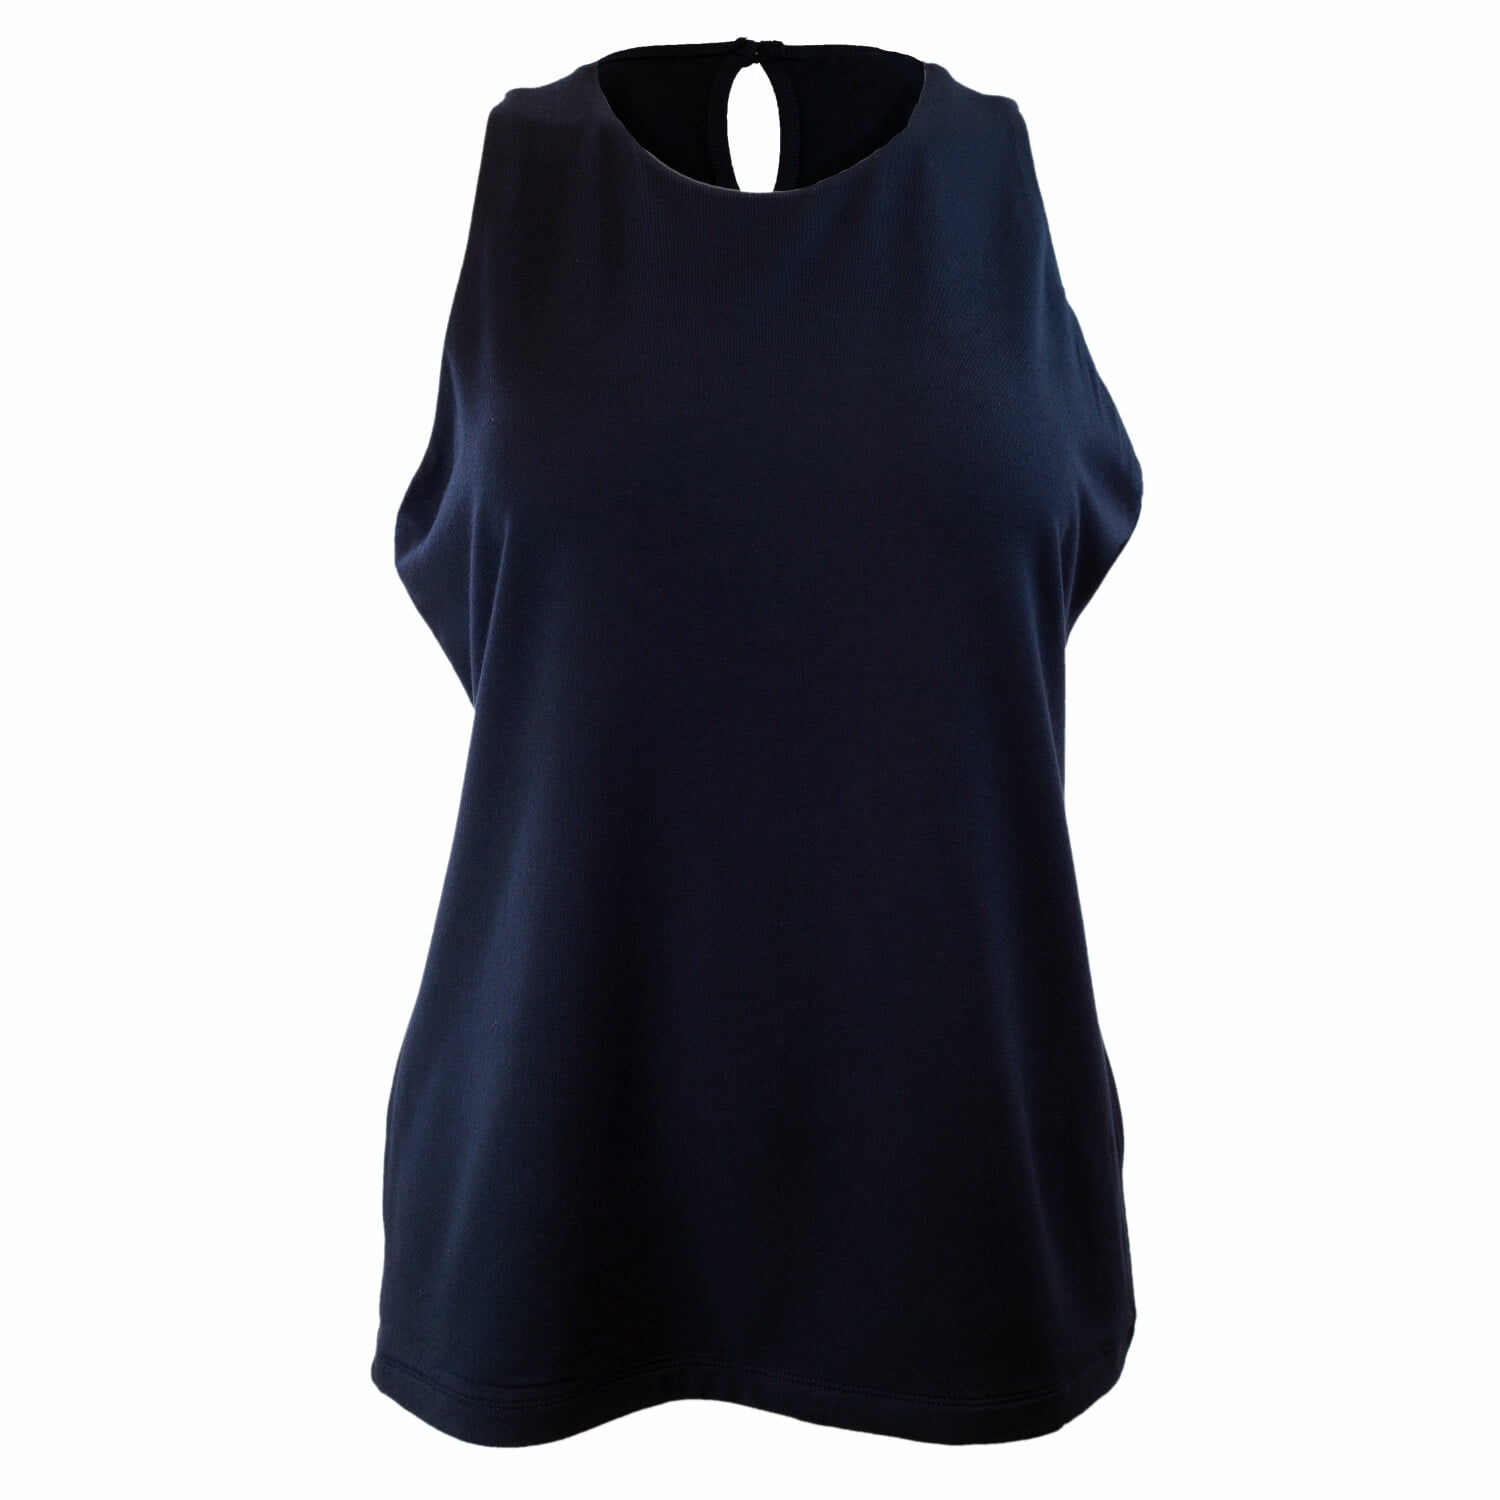 Etcetera Women's Oceana Dress Shirt,Premium Nylon, Lightweight - S ...